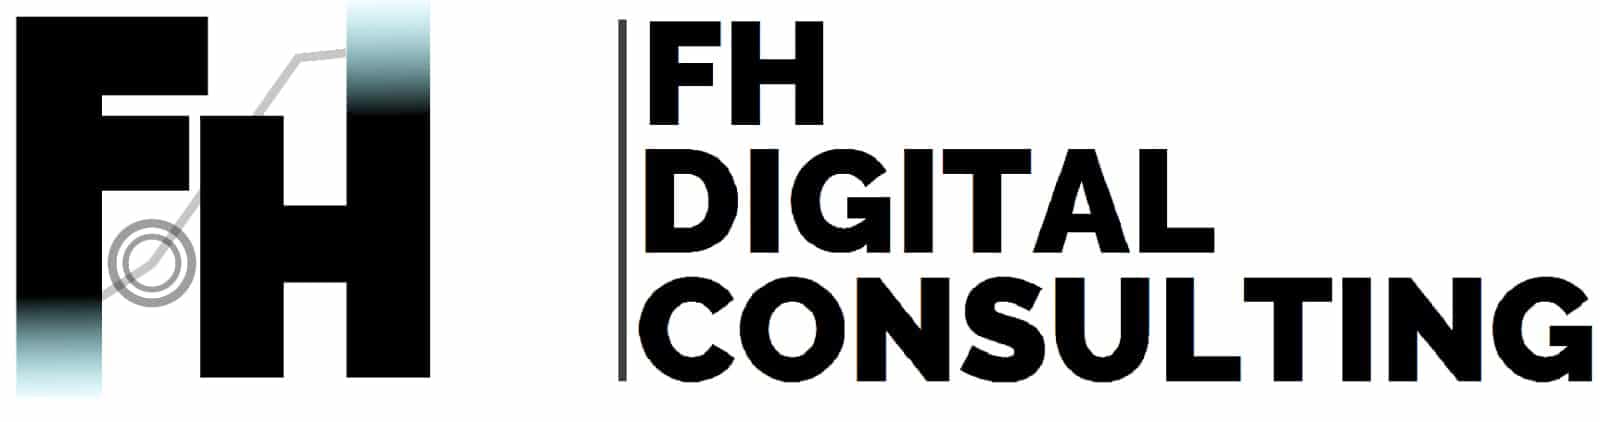 Logo-FH.jpg